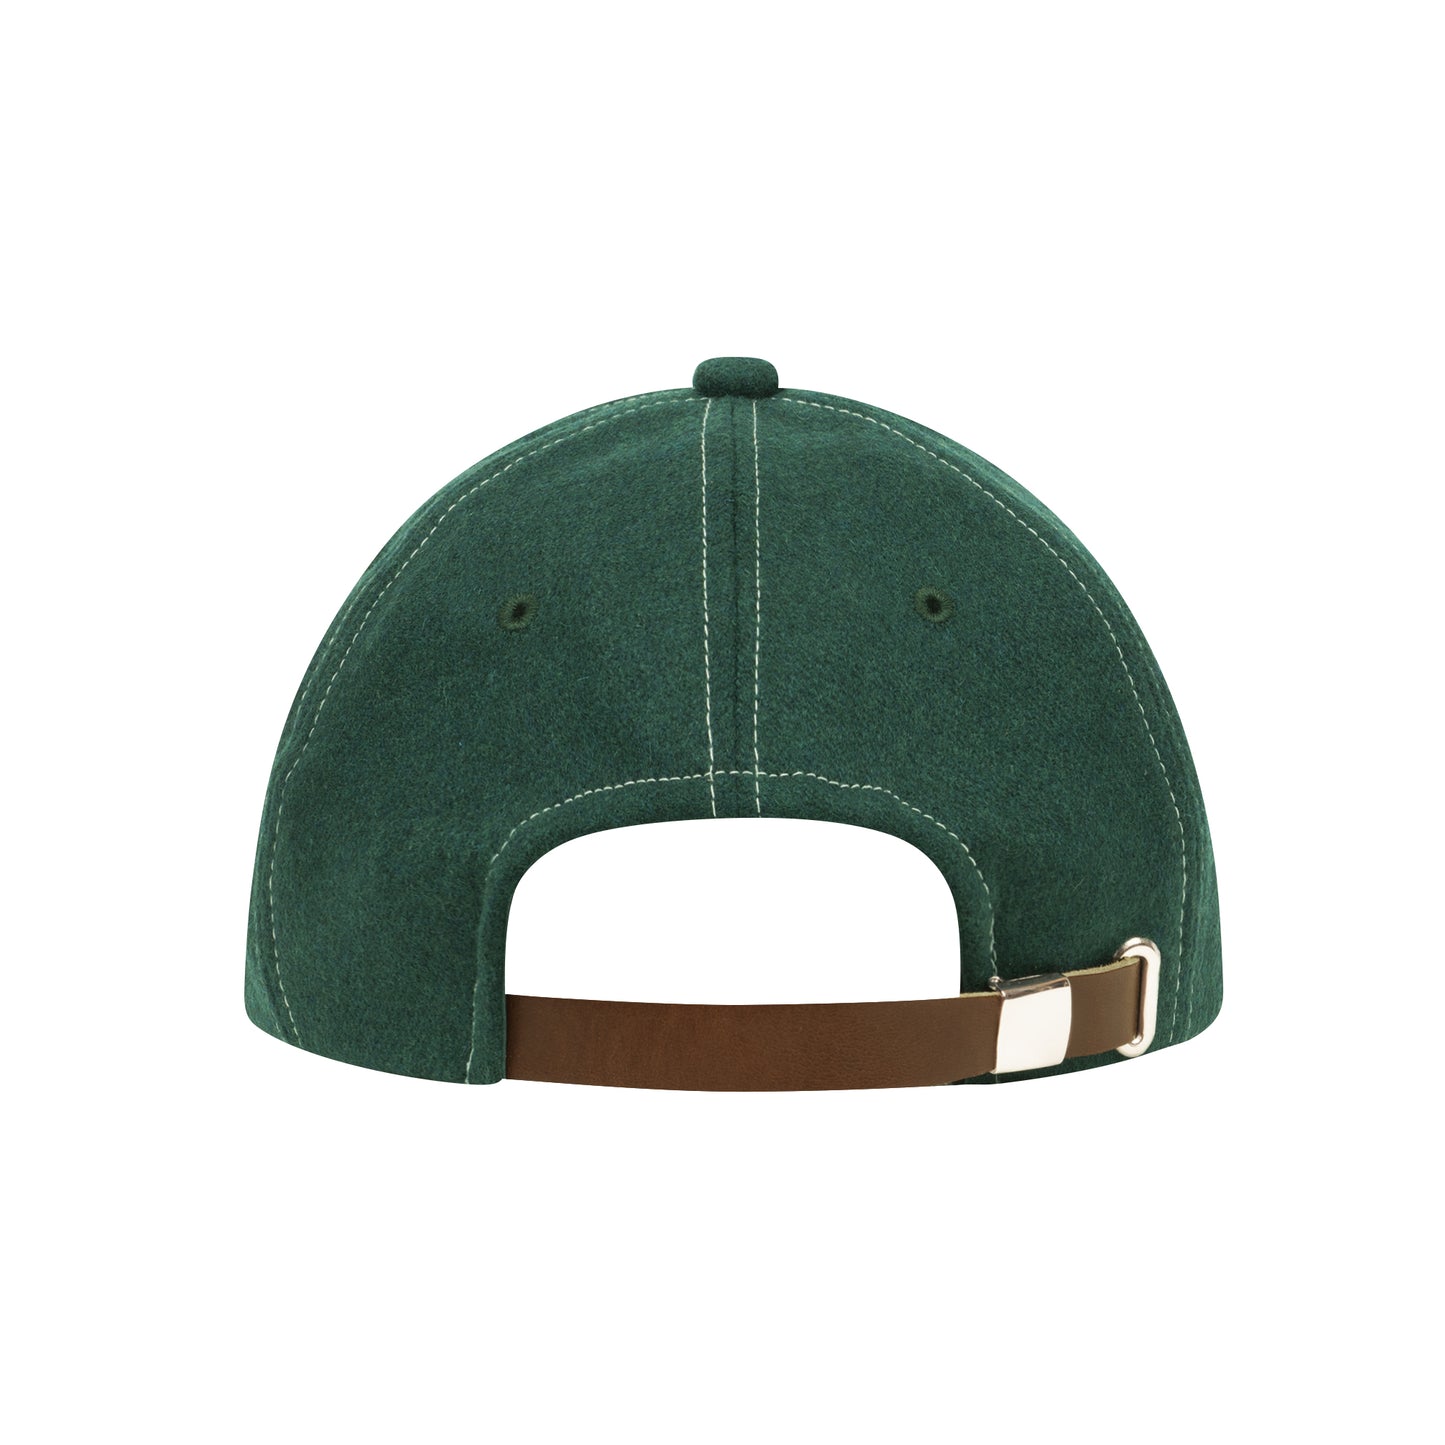 b 6P Wool Cap (dark green)